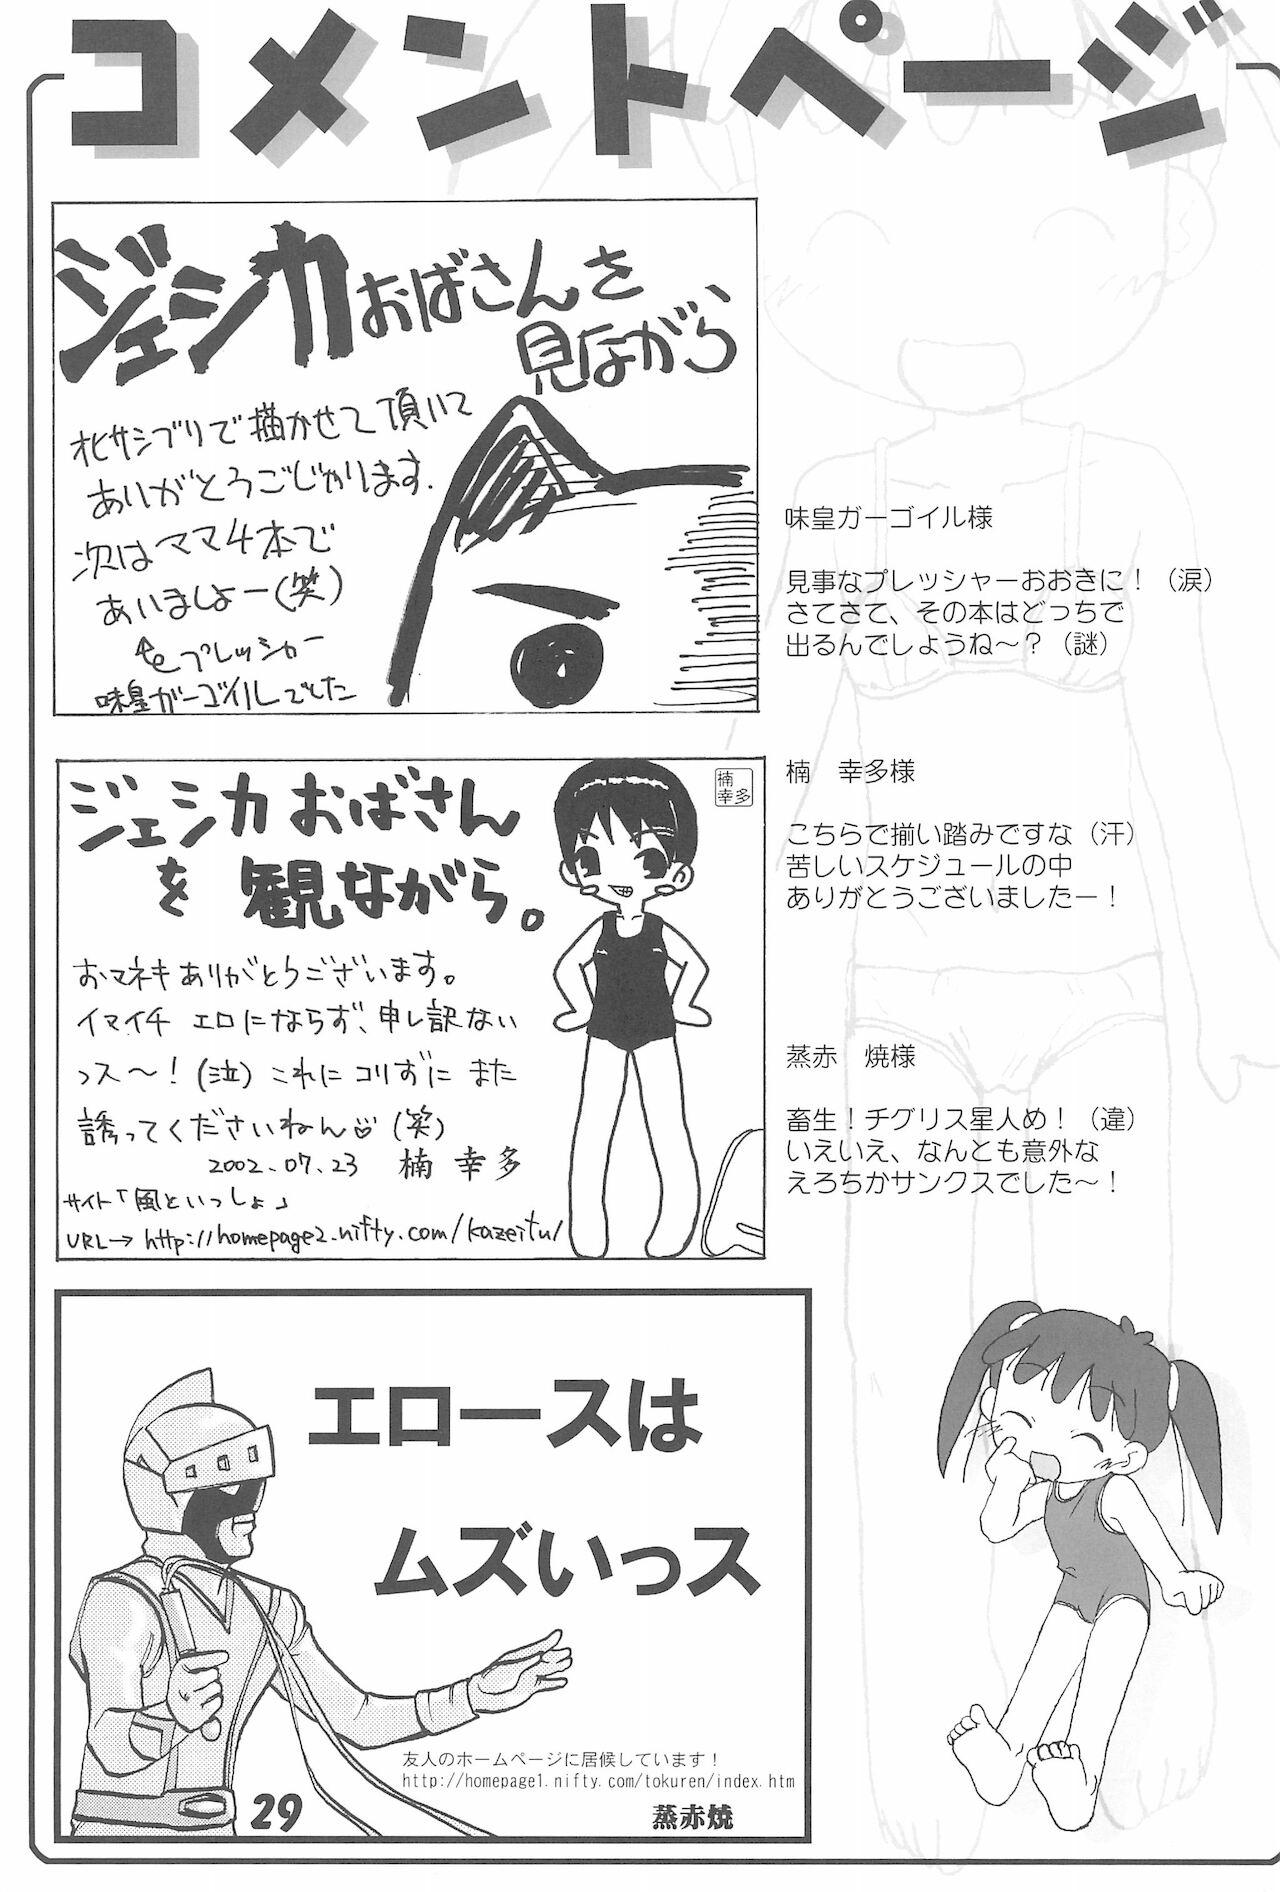 Transexual Zettai nandakara ne... - Azuki chan Tan - Page 29